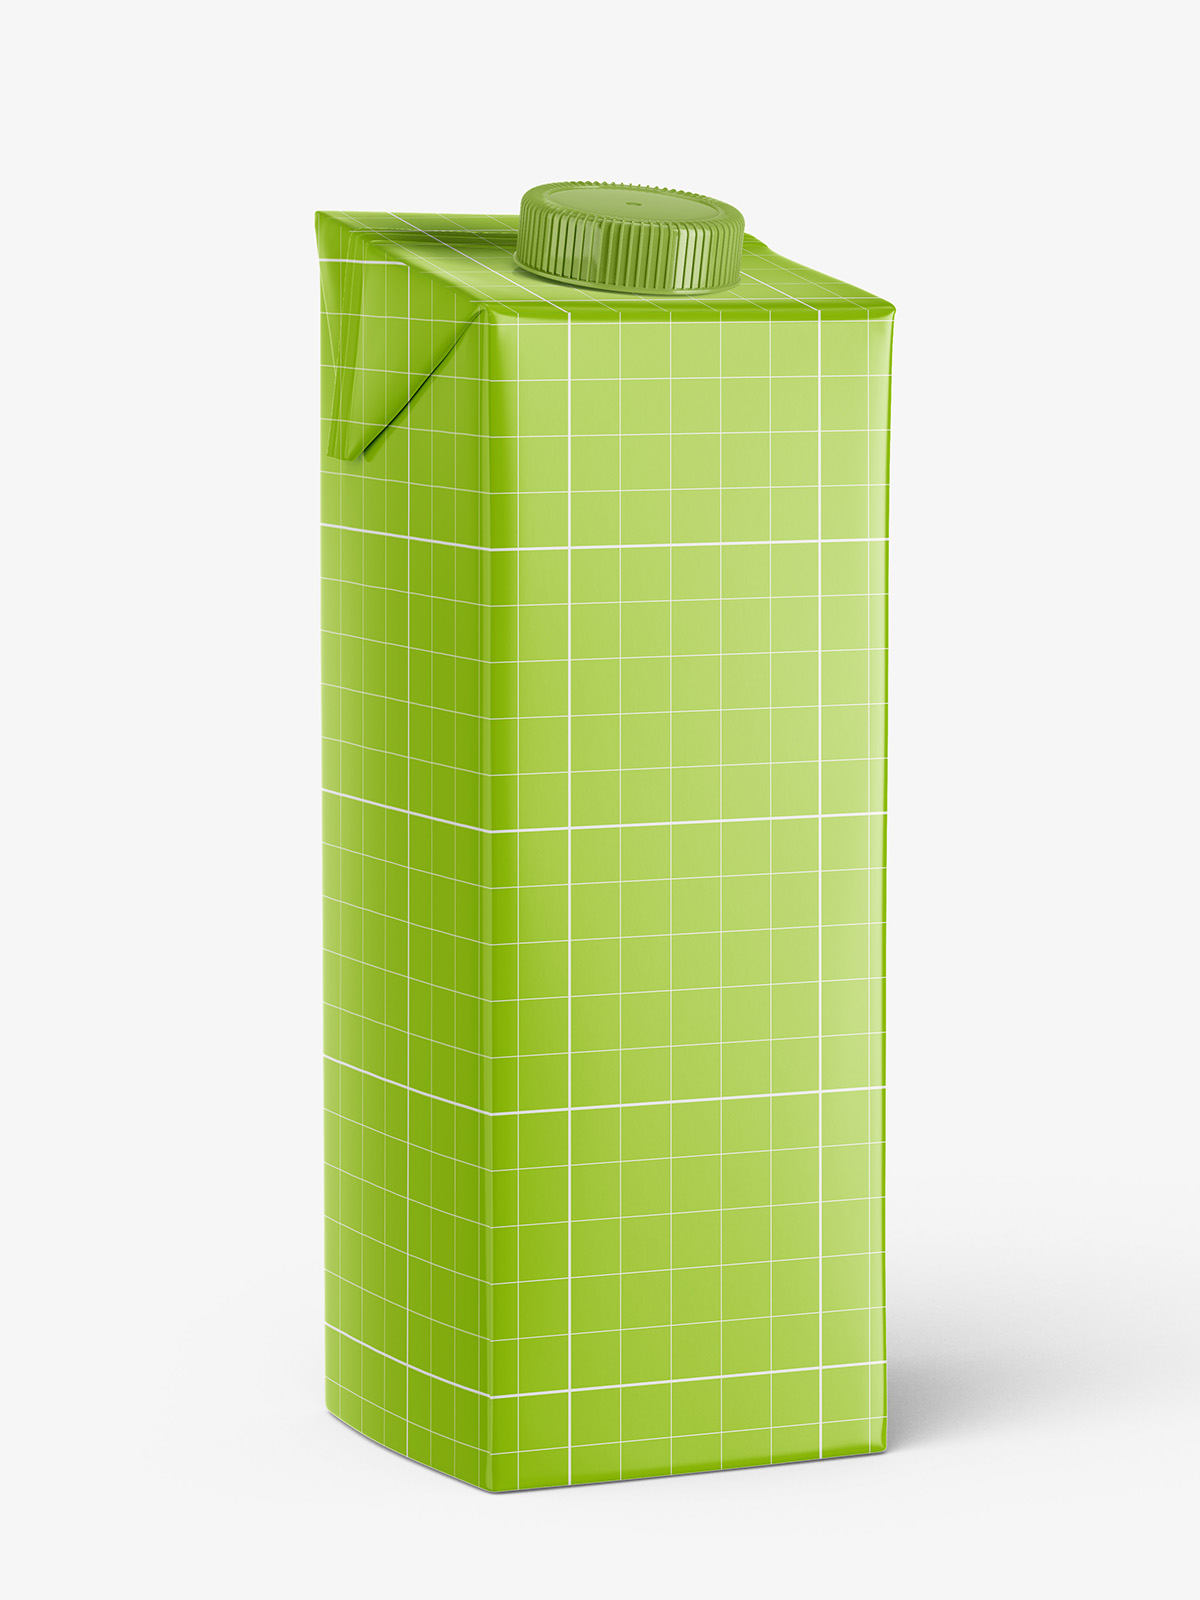 Download Carton juice mockup - Smarty Mockups